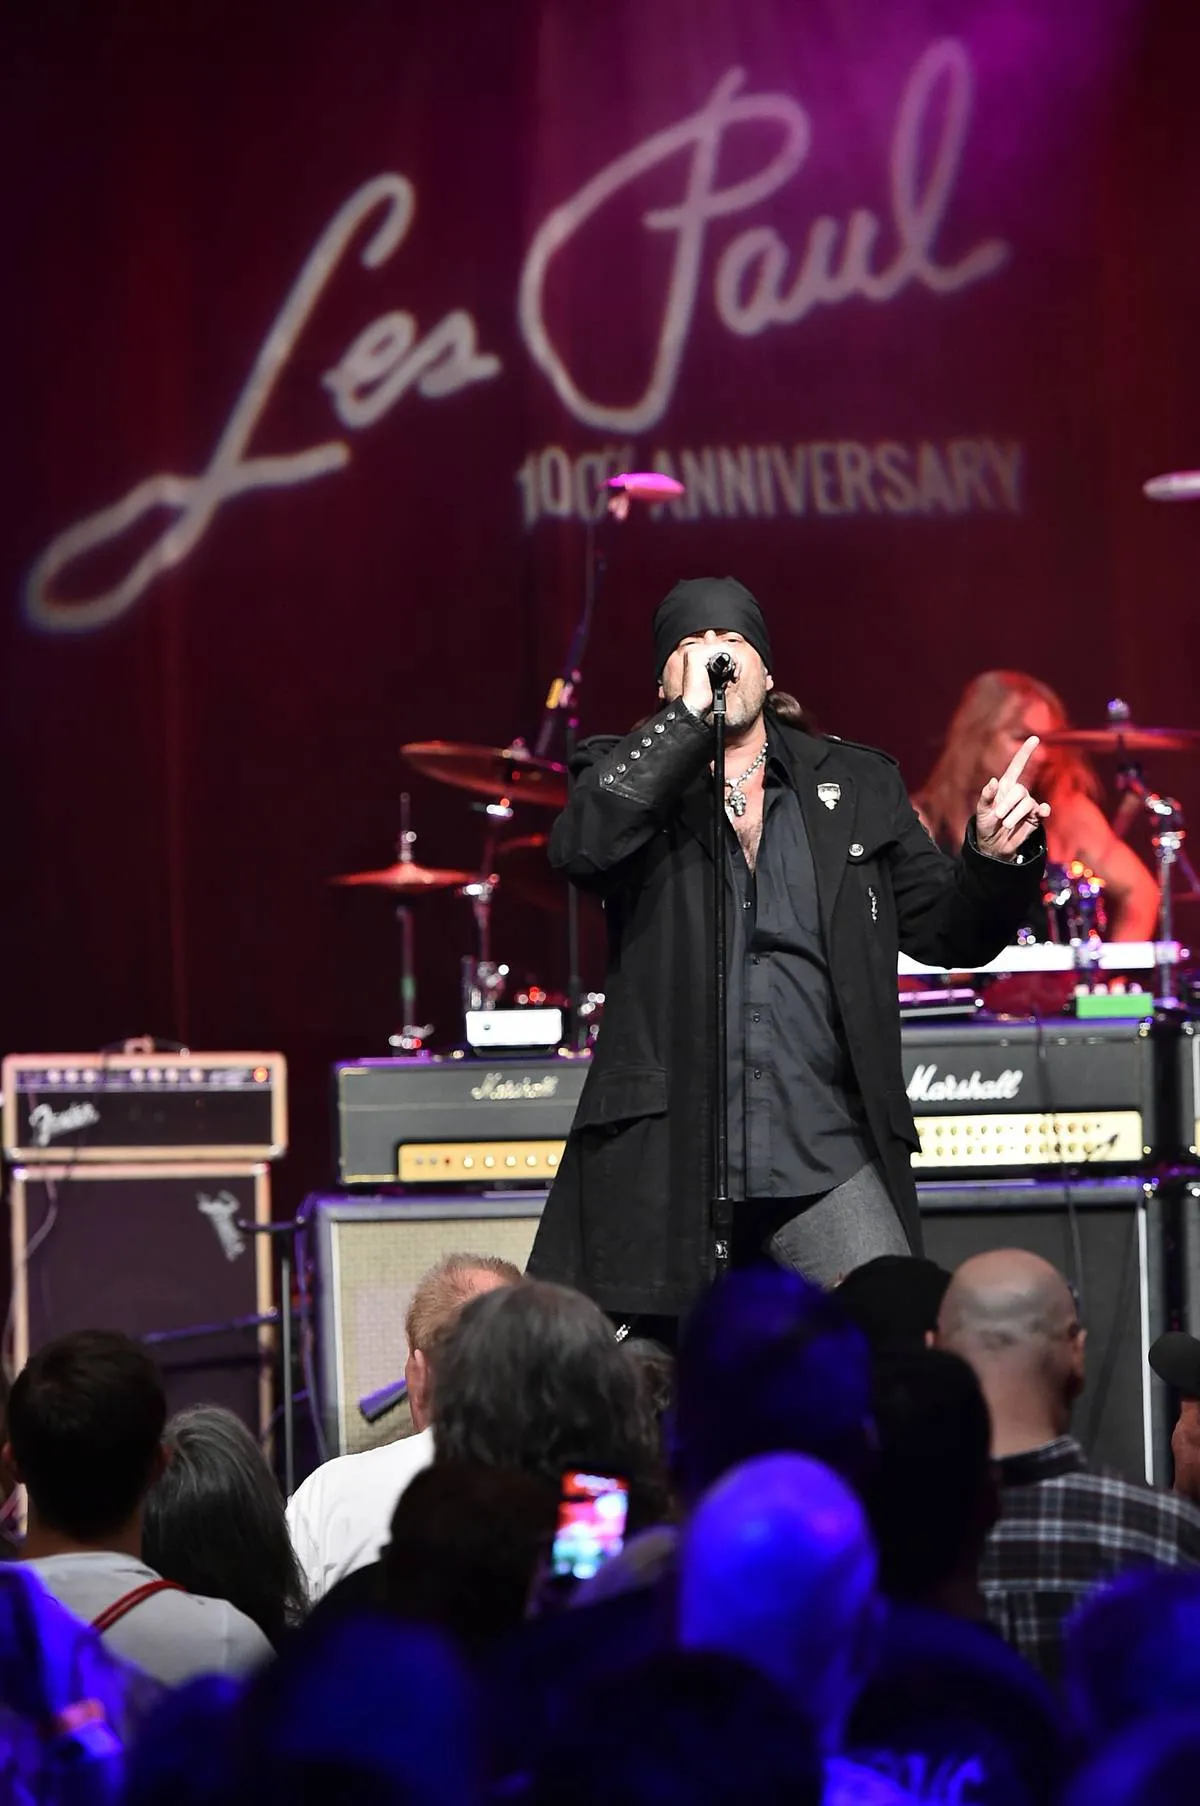 Les Paul 100th Anniversary Celebration - Performance